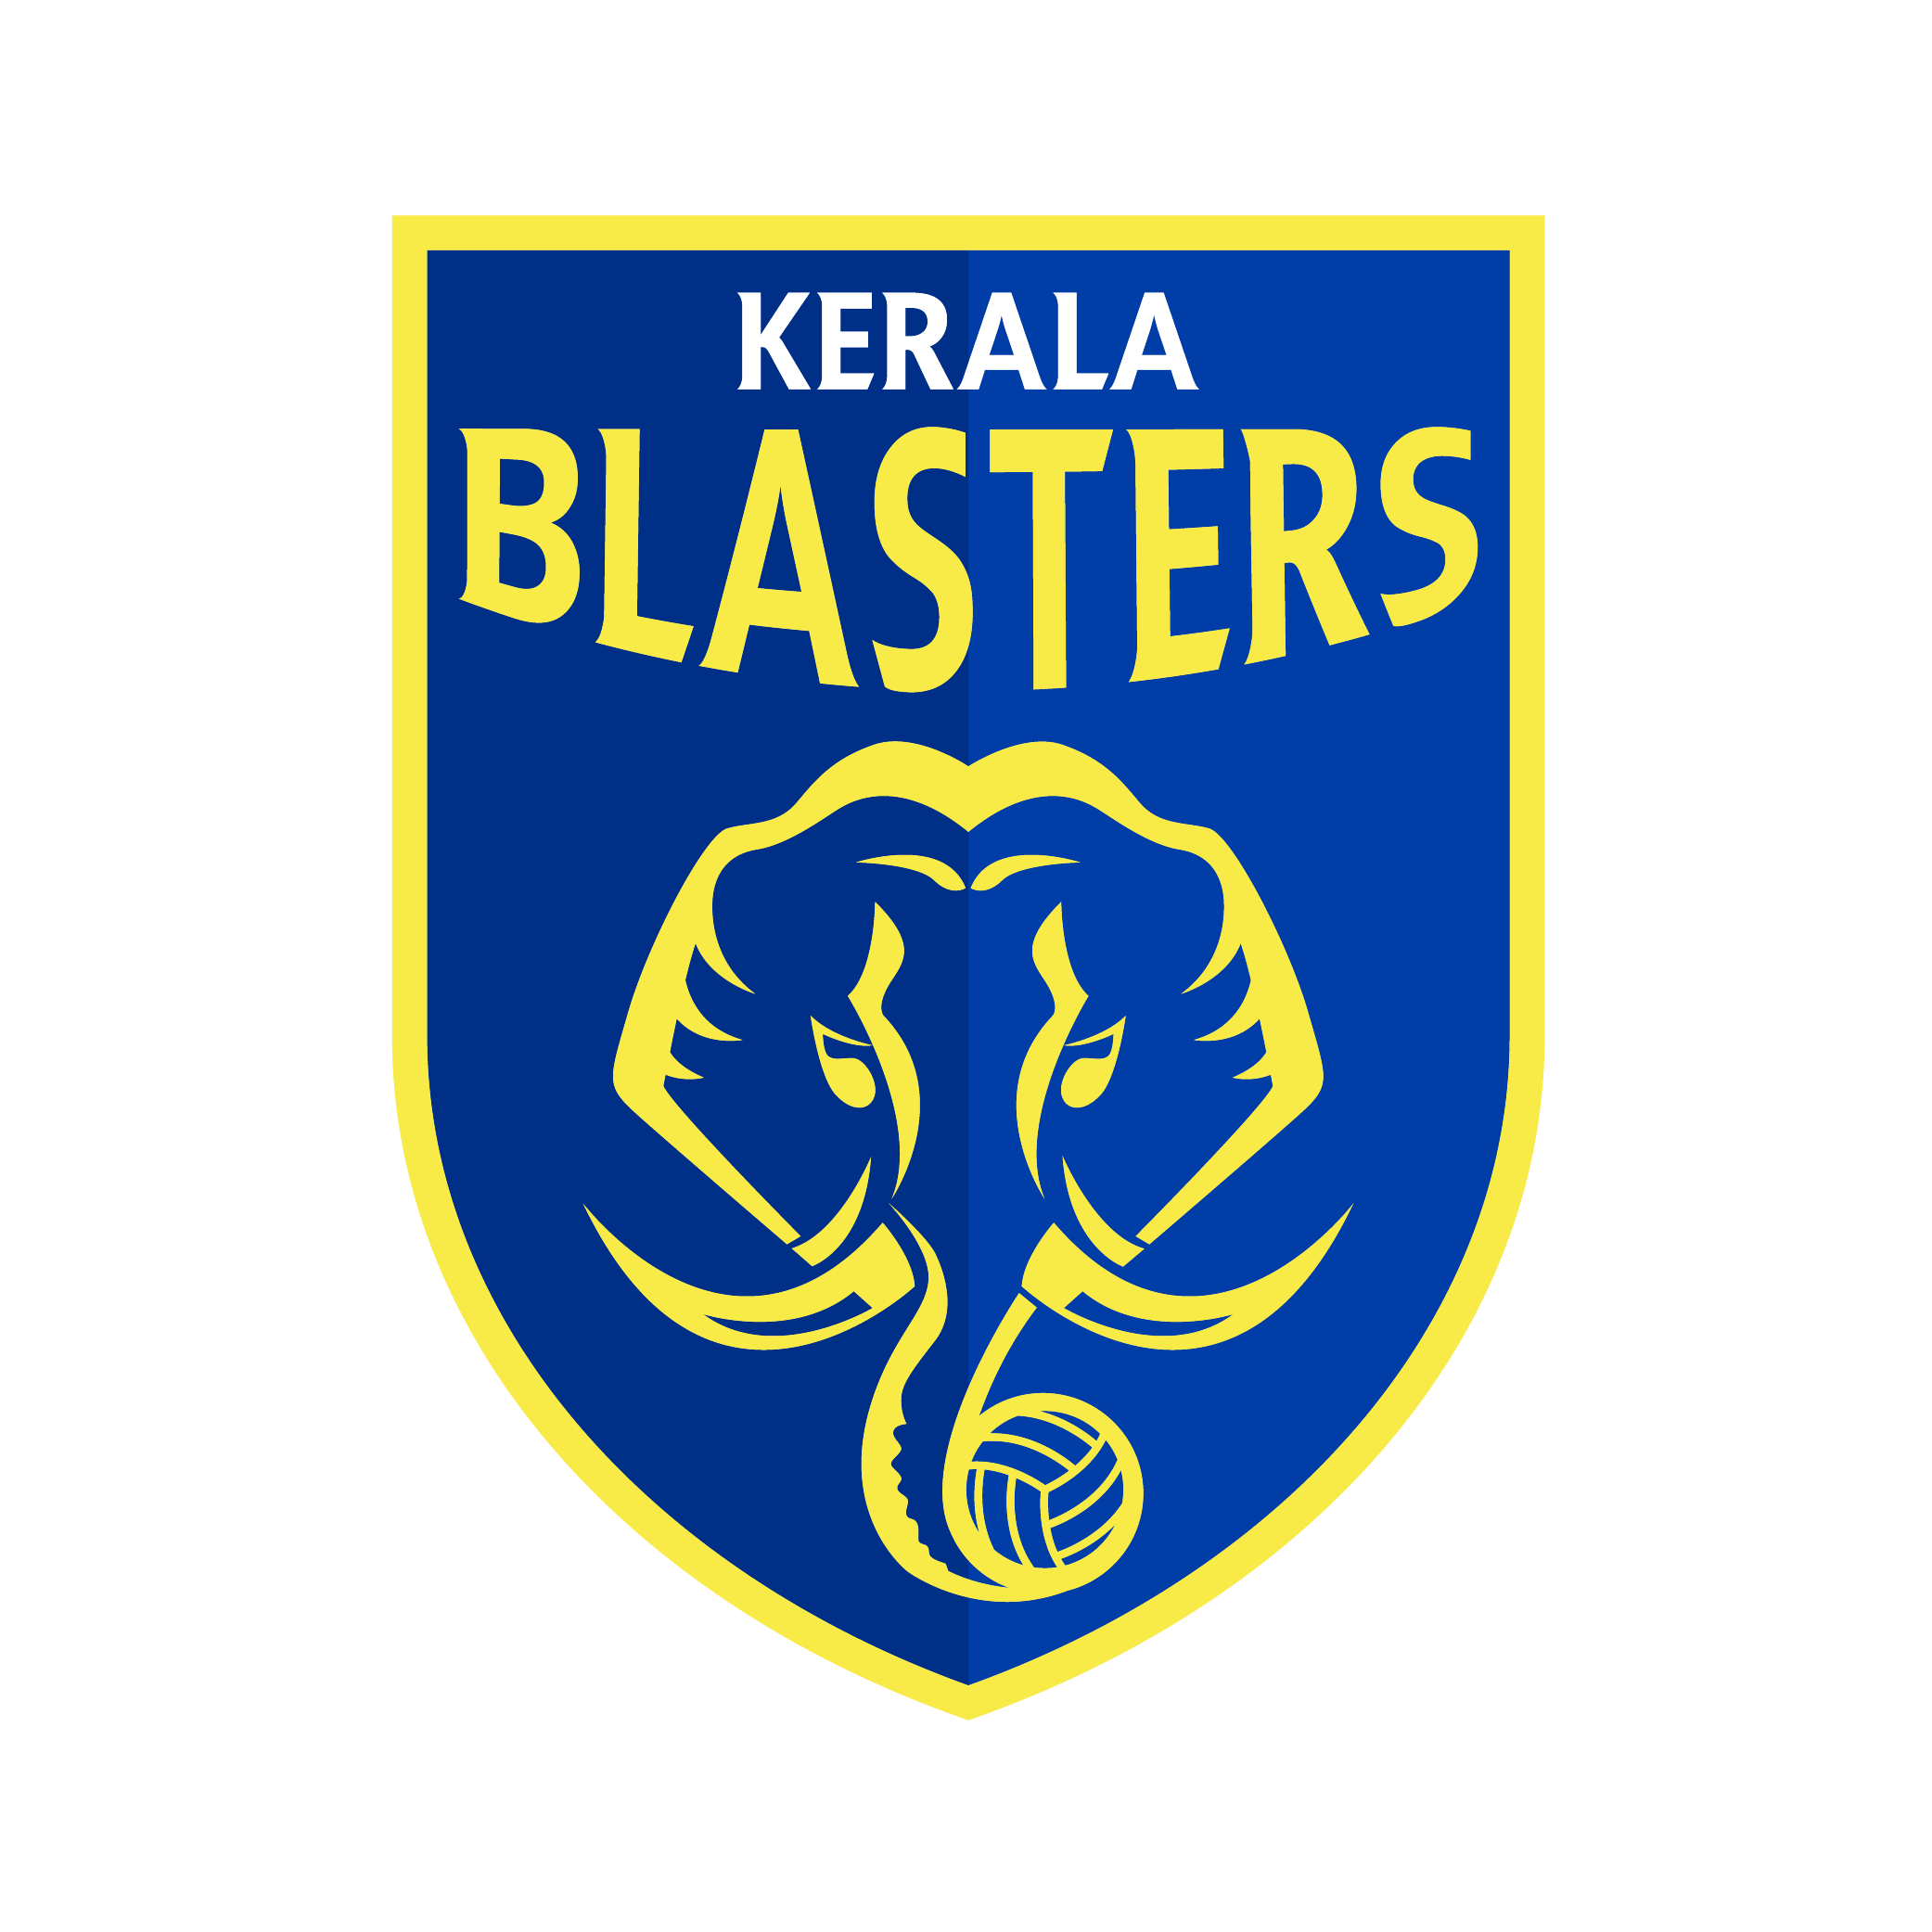 Emblem of Kerala - Wikipedia